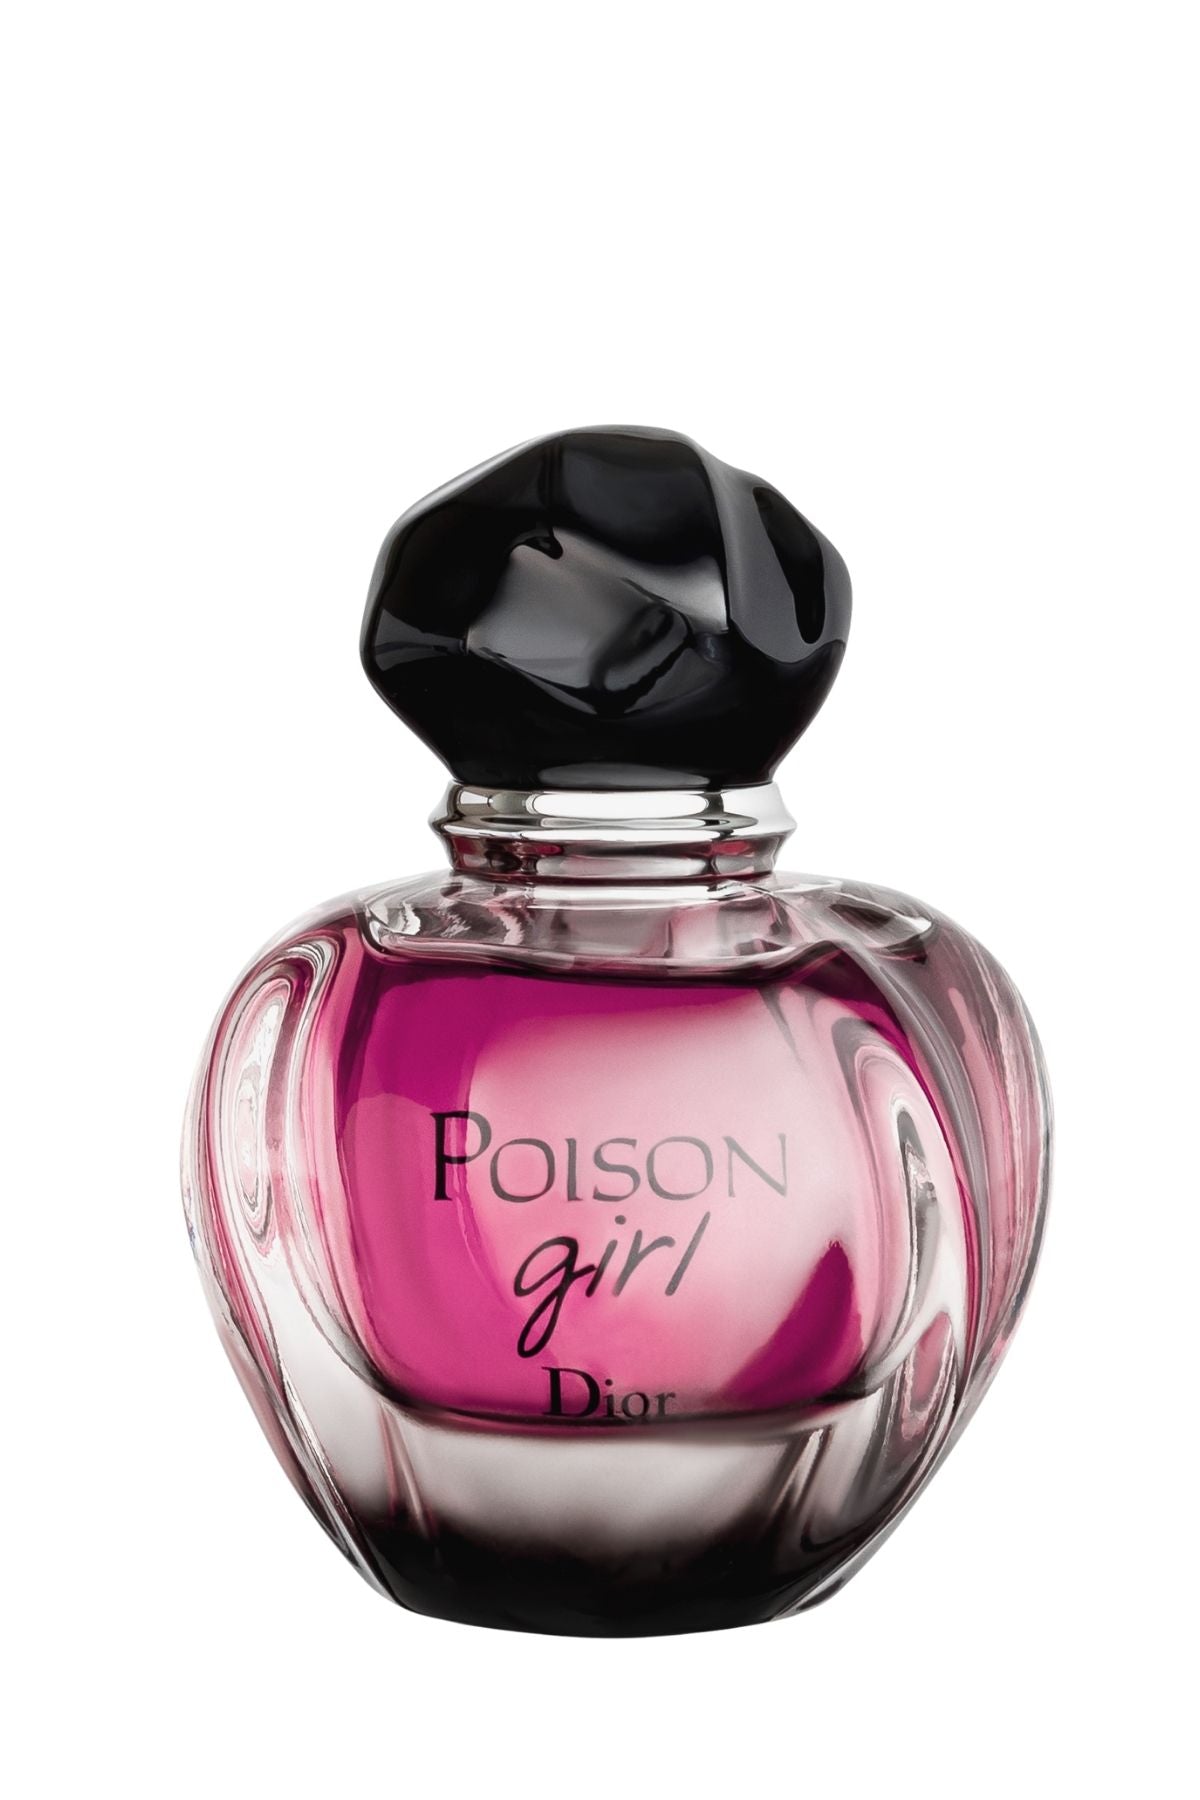 Bachelor opleiding etiket stropdas Dior | Poison Girl EDP - REBL